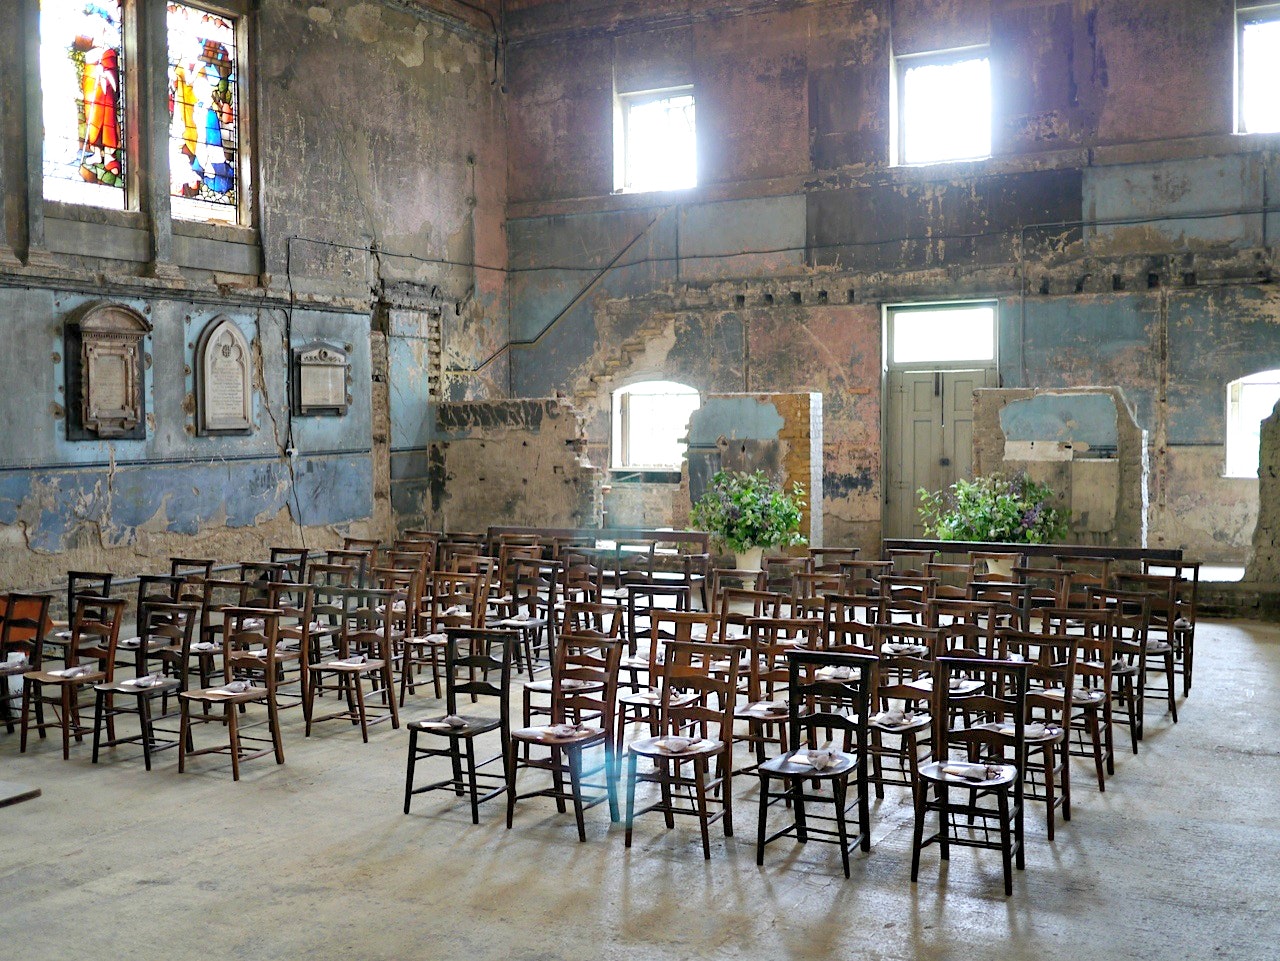 Chapel Wedding Venues in London - Asylum - Weddings in The Chapel - Banner